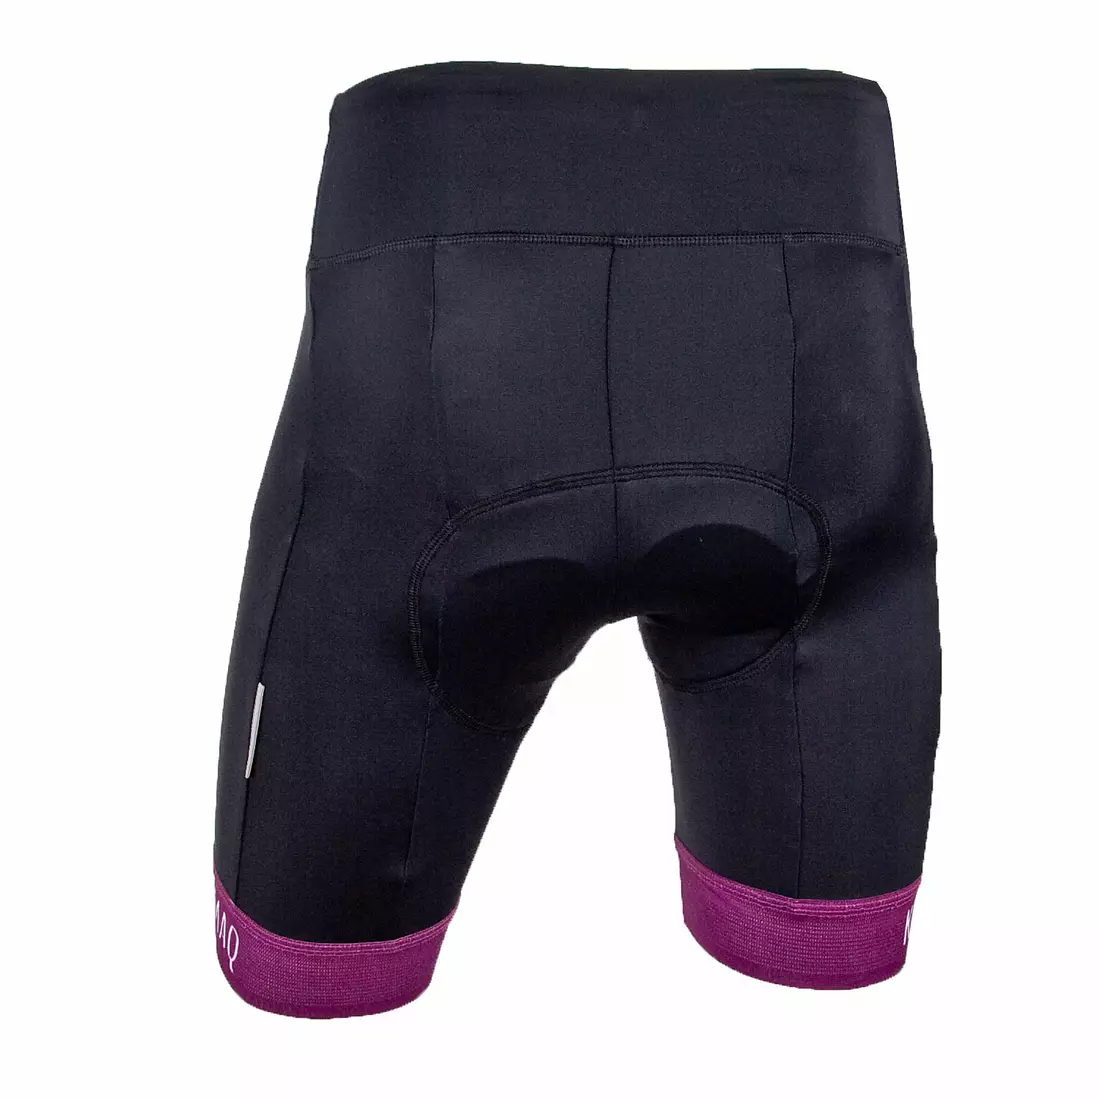 KAYMAQ women's cycling shorts, Alta 01.191 black-purple